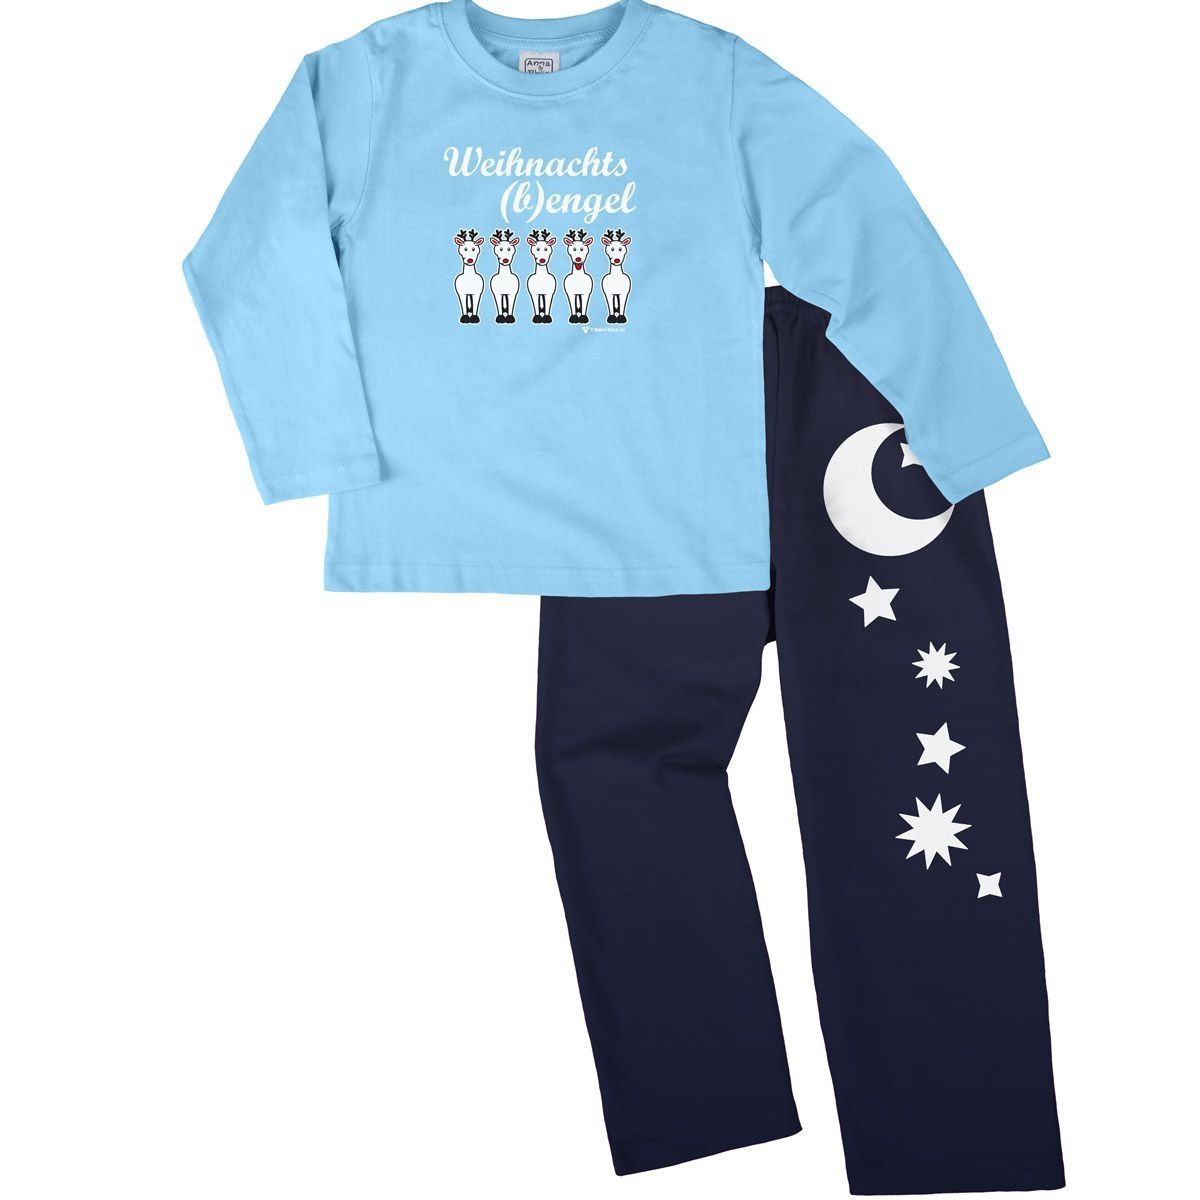 Weihnachtsbengel Pyjama Set hellblau / navy 110 / 116